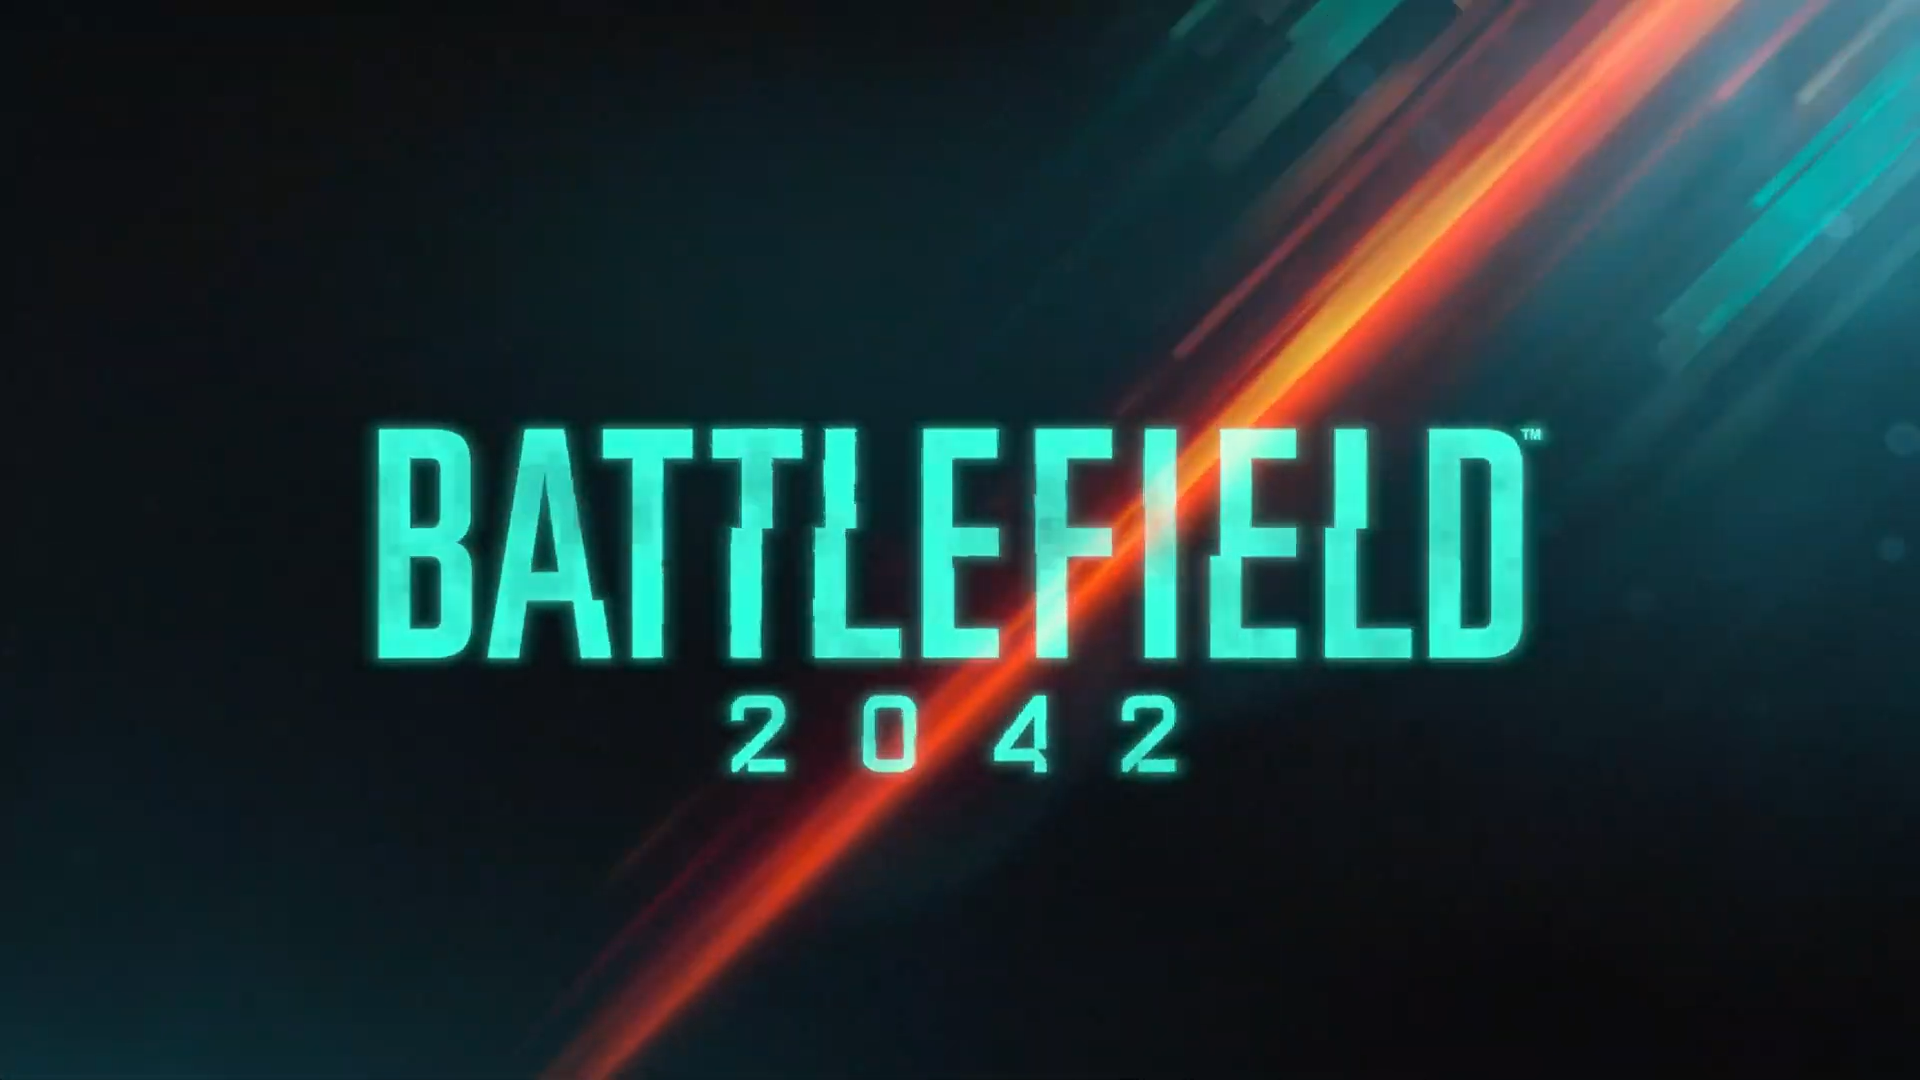 Battlefield 2042 Arrives October 22 With 128 Player Maps, Massive Destruction